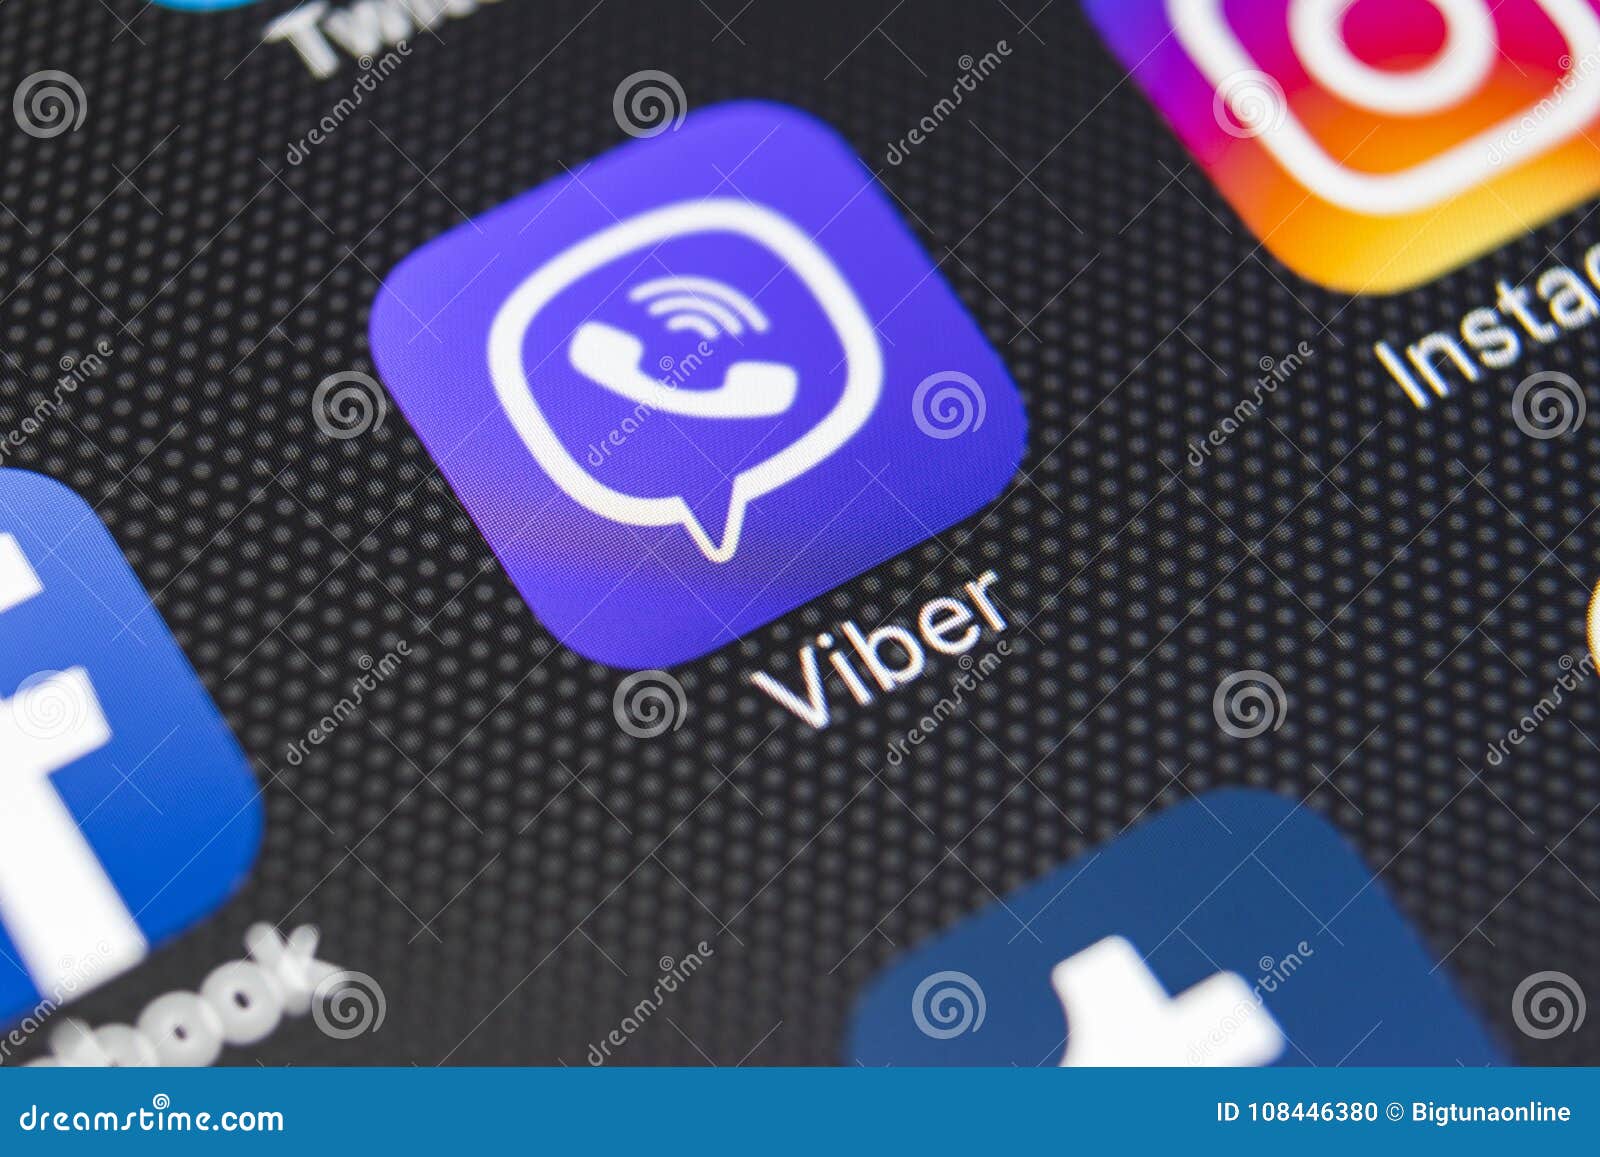 viber icon display